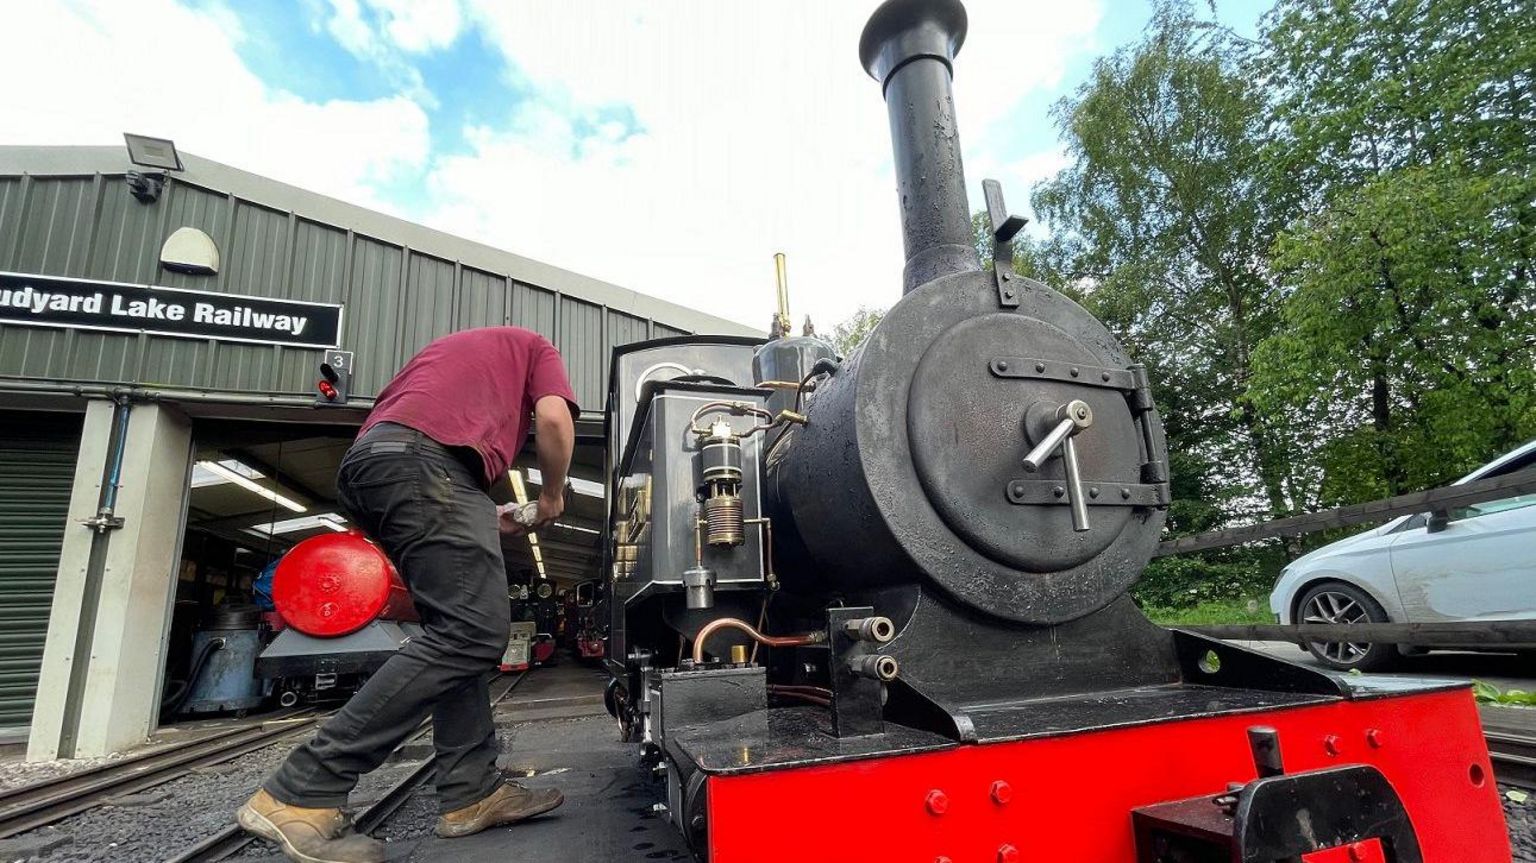 A man next to a steam engine